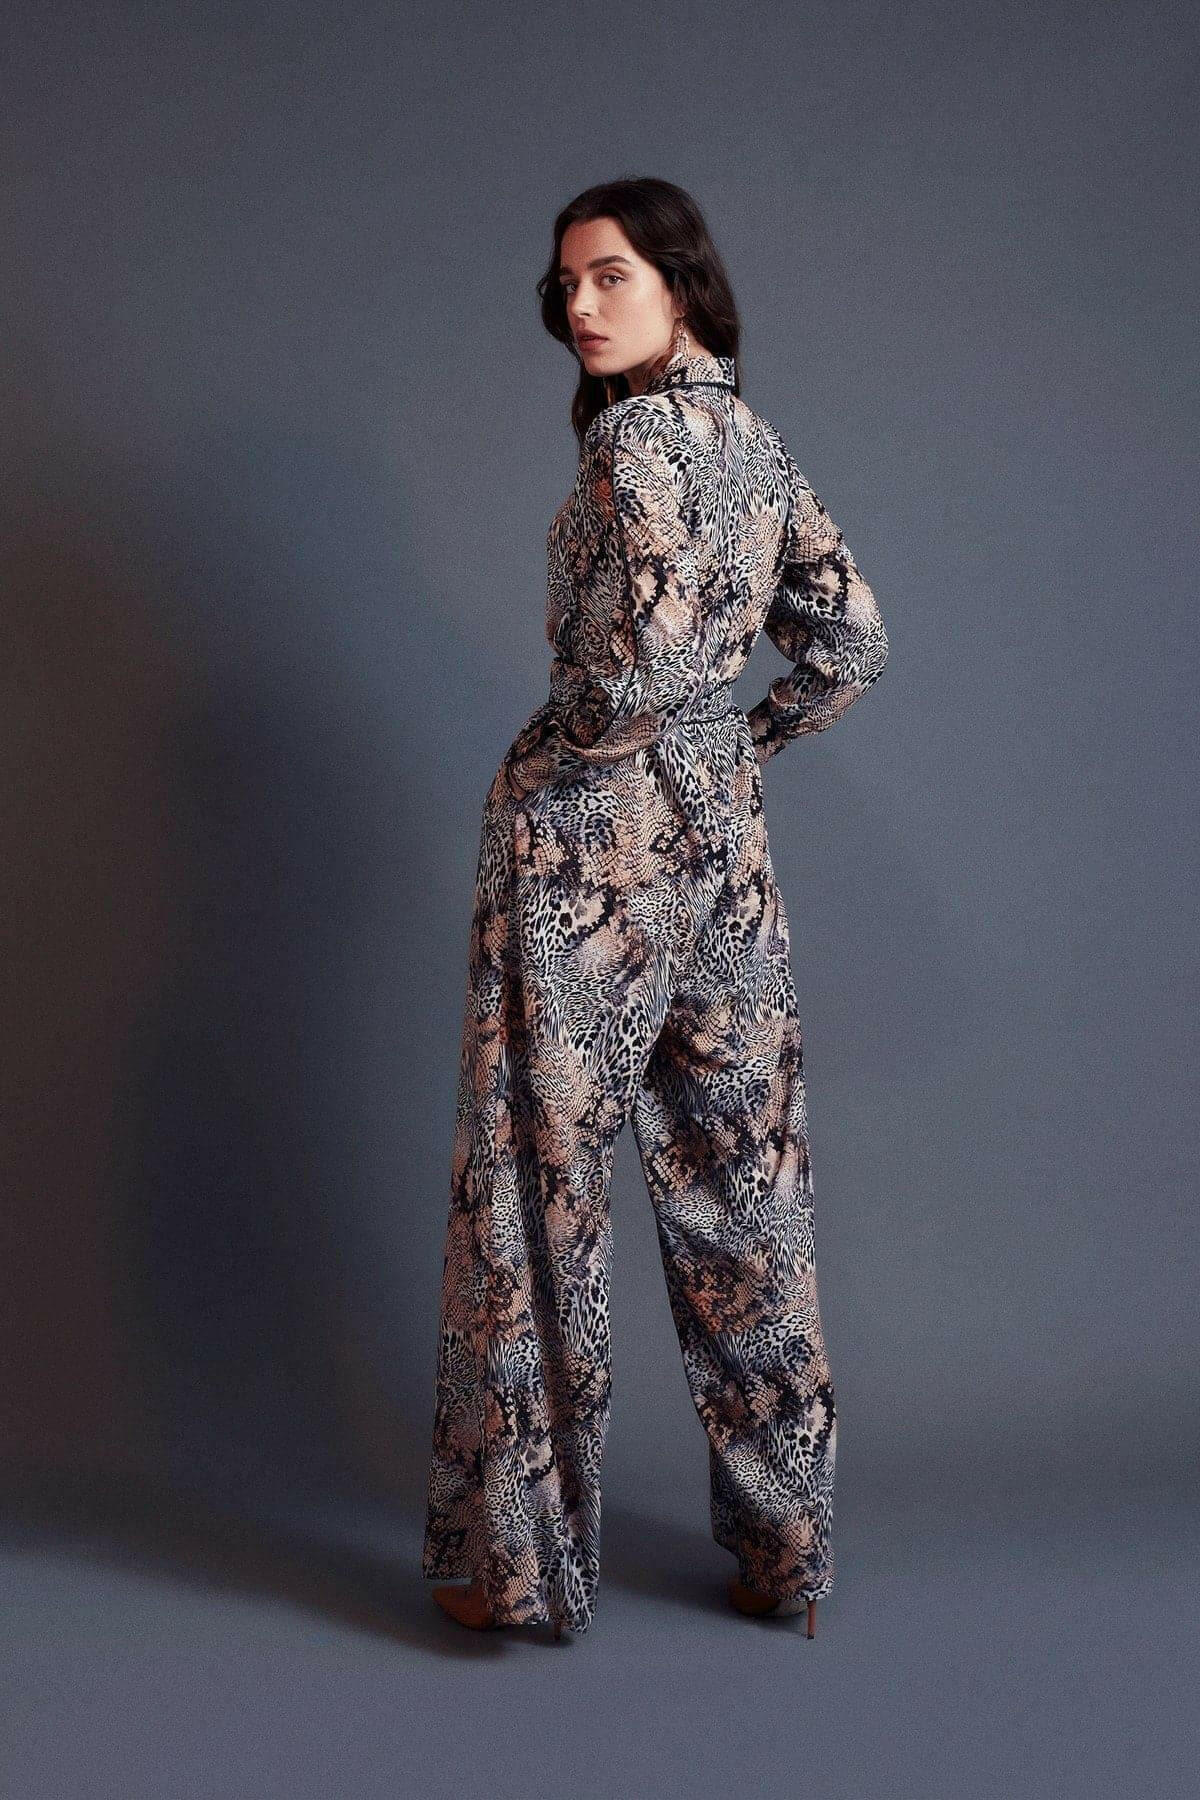 Ella Leather Piped Leopard Print Jumpsuit.